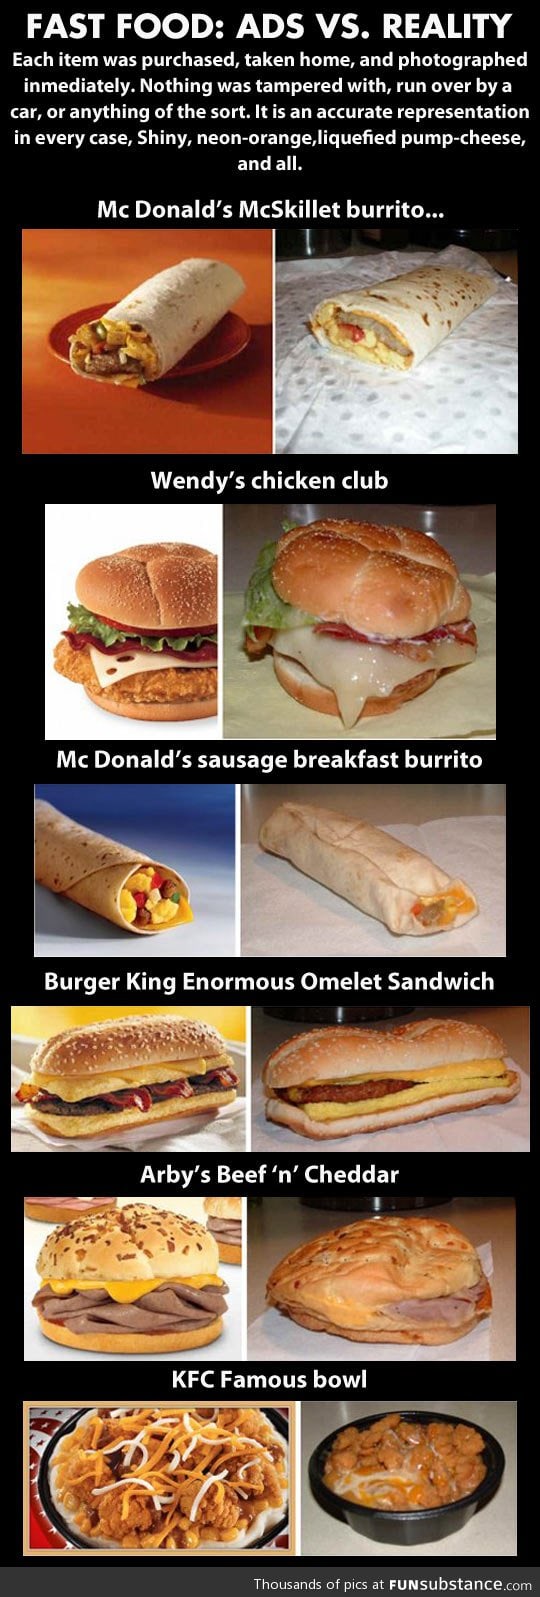 Fast food: Truth vs. Advertising